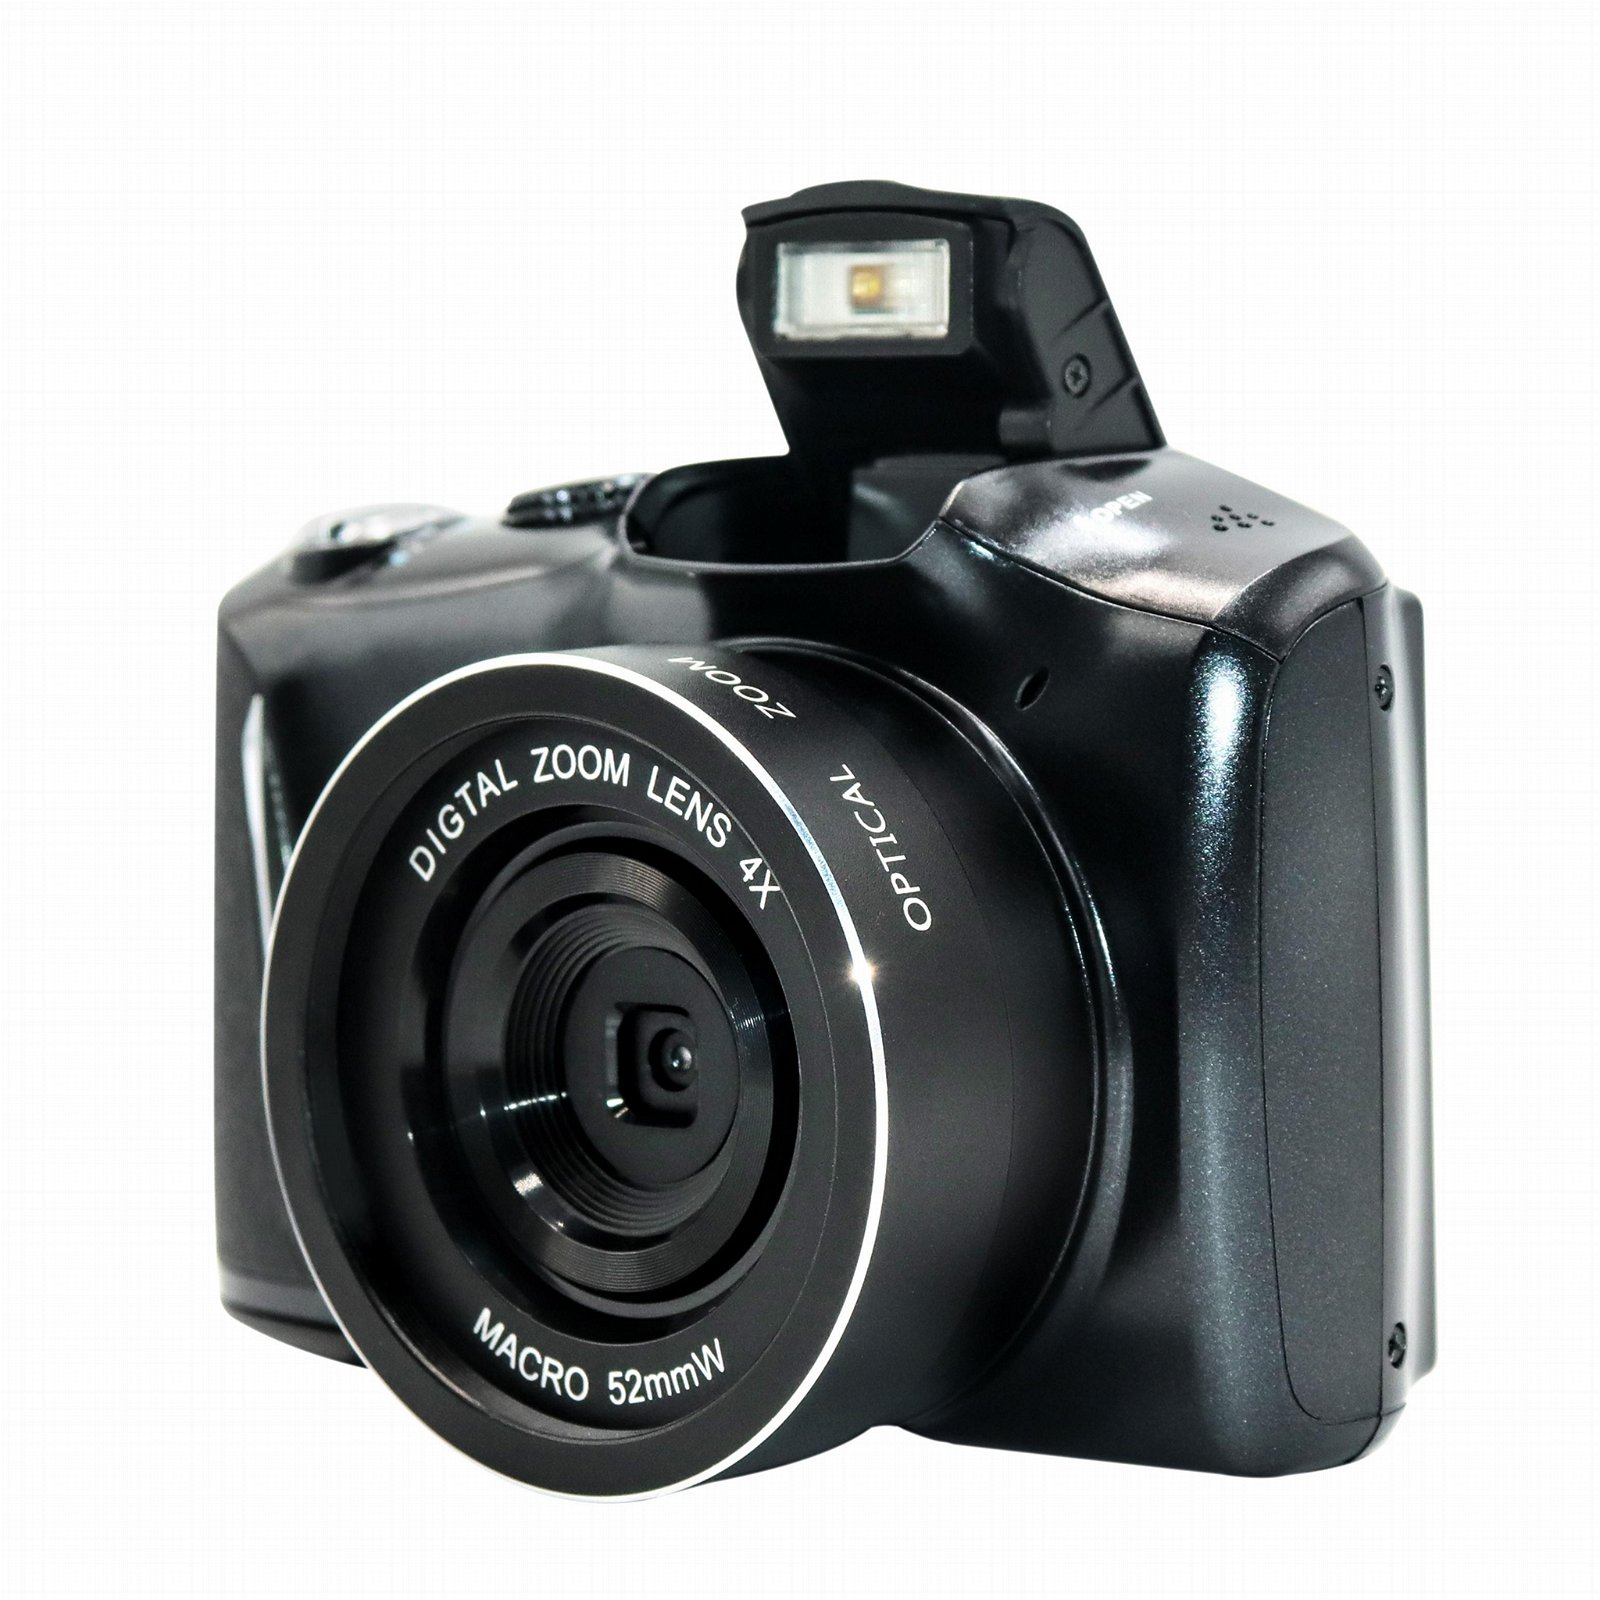 Max 48MP digital camera with 3.5'' Color display 5